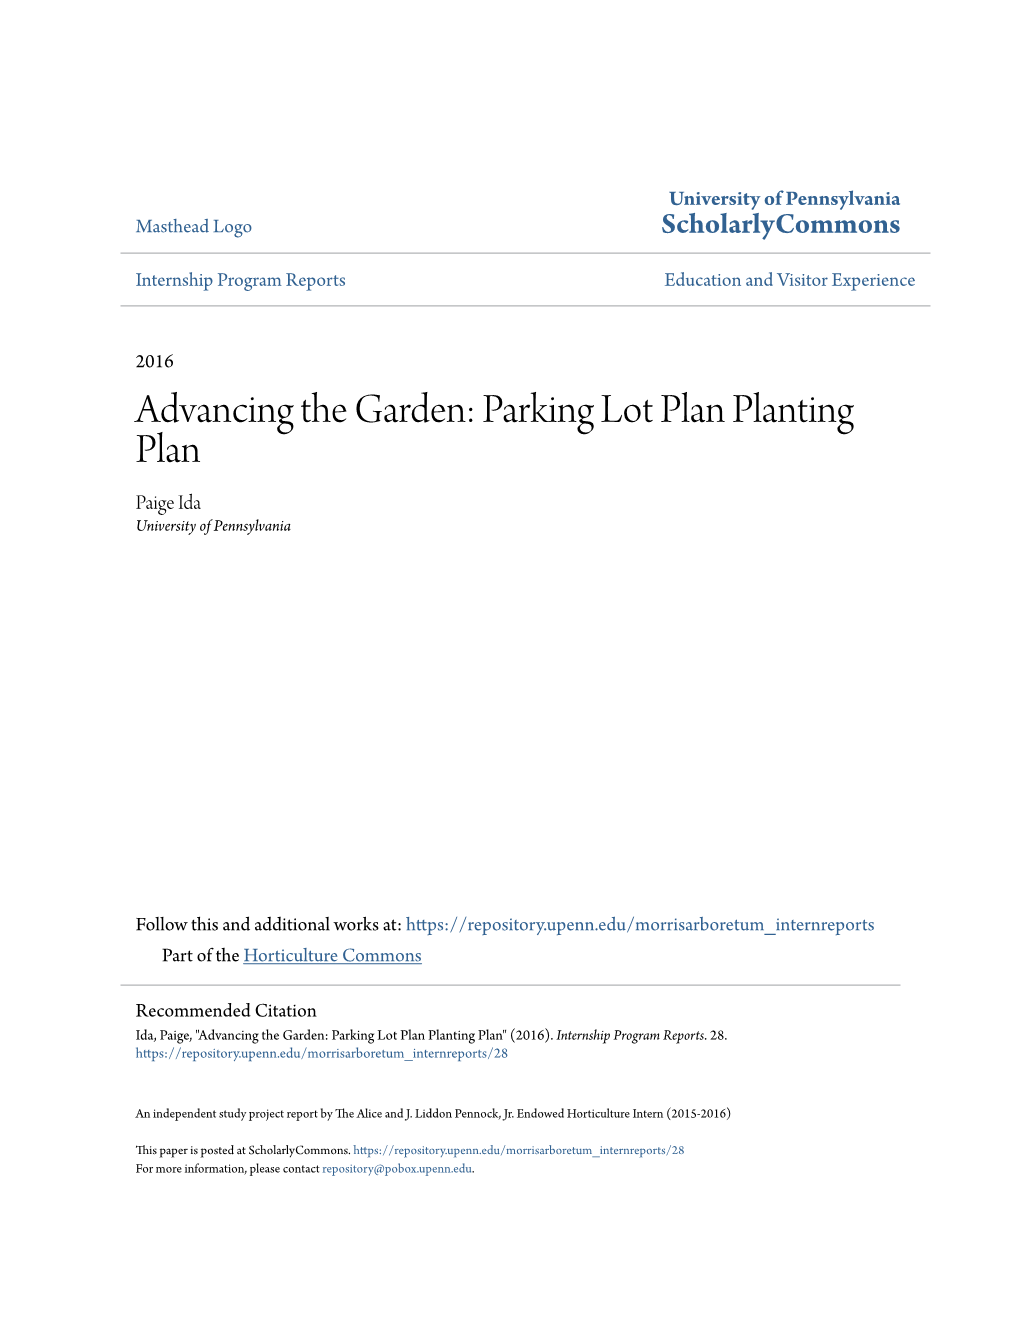 Parking Lot Plan Planting Plan Paige Ida University of Pennsylvania